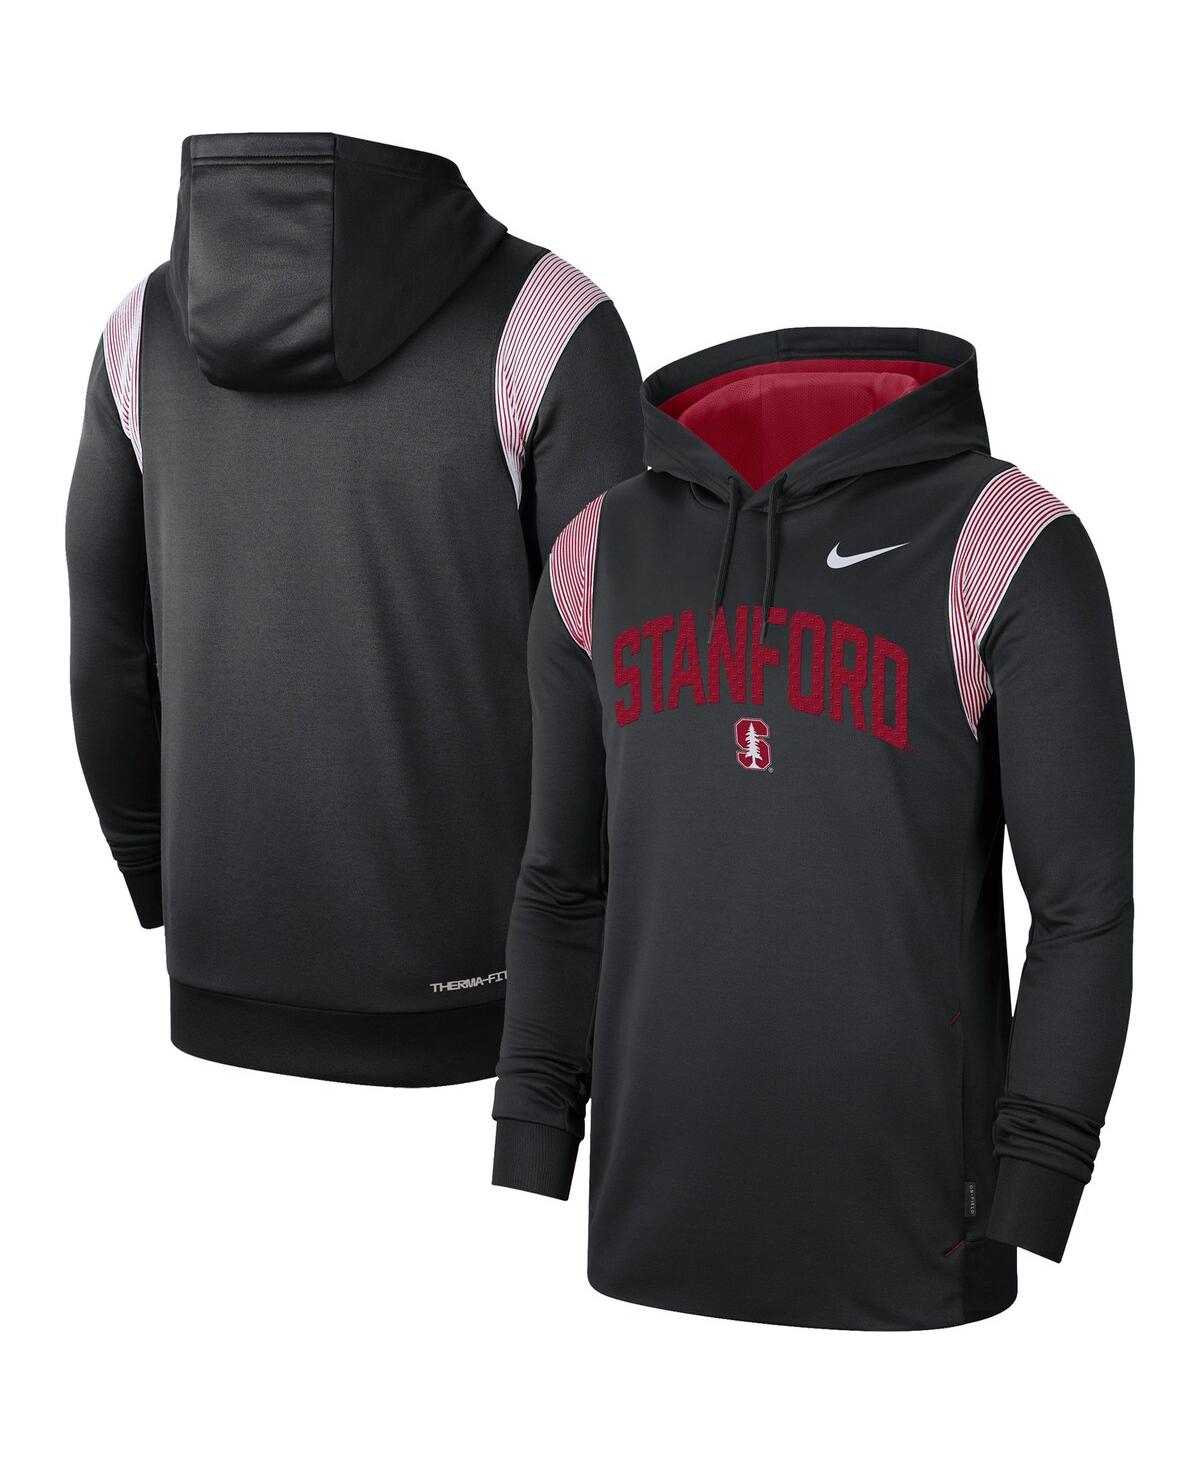 Shop Nike Men's  Black Stanford Cardinal 2022 Game Day Sideline Performance Pullover Hoodie